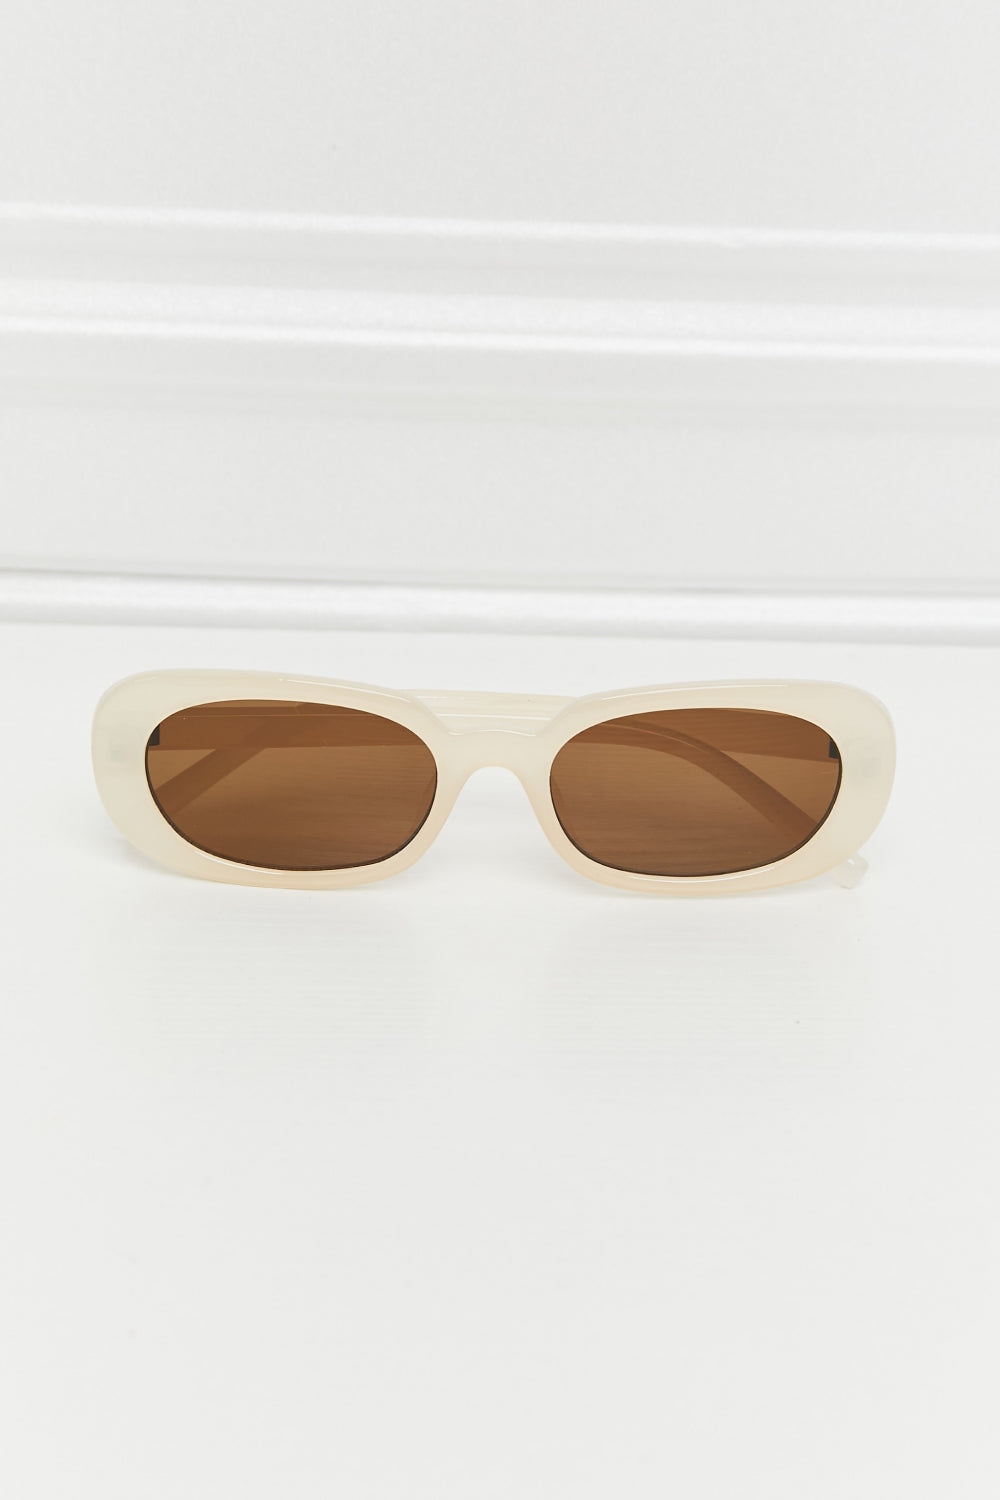 Oval Full Rim Sunglasses - The Fashion Unicorn